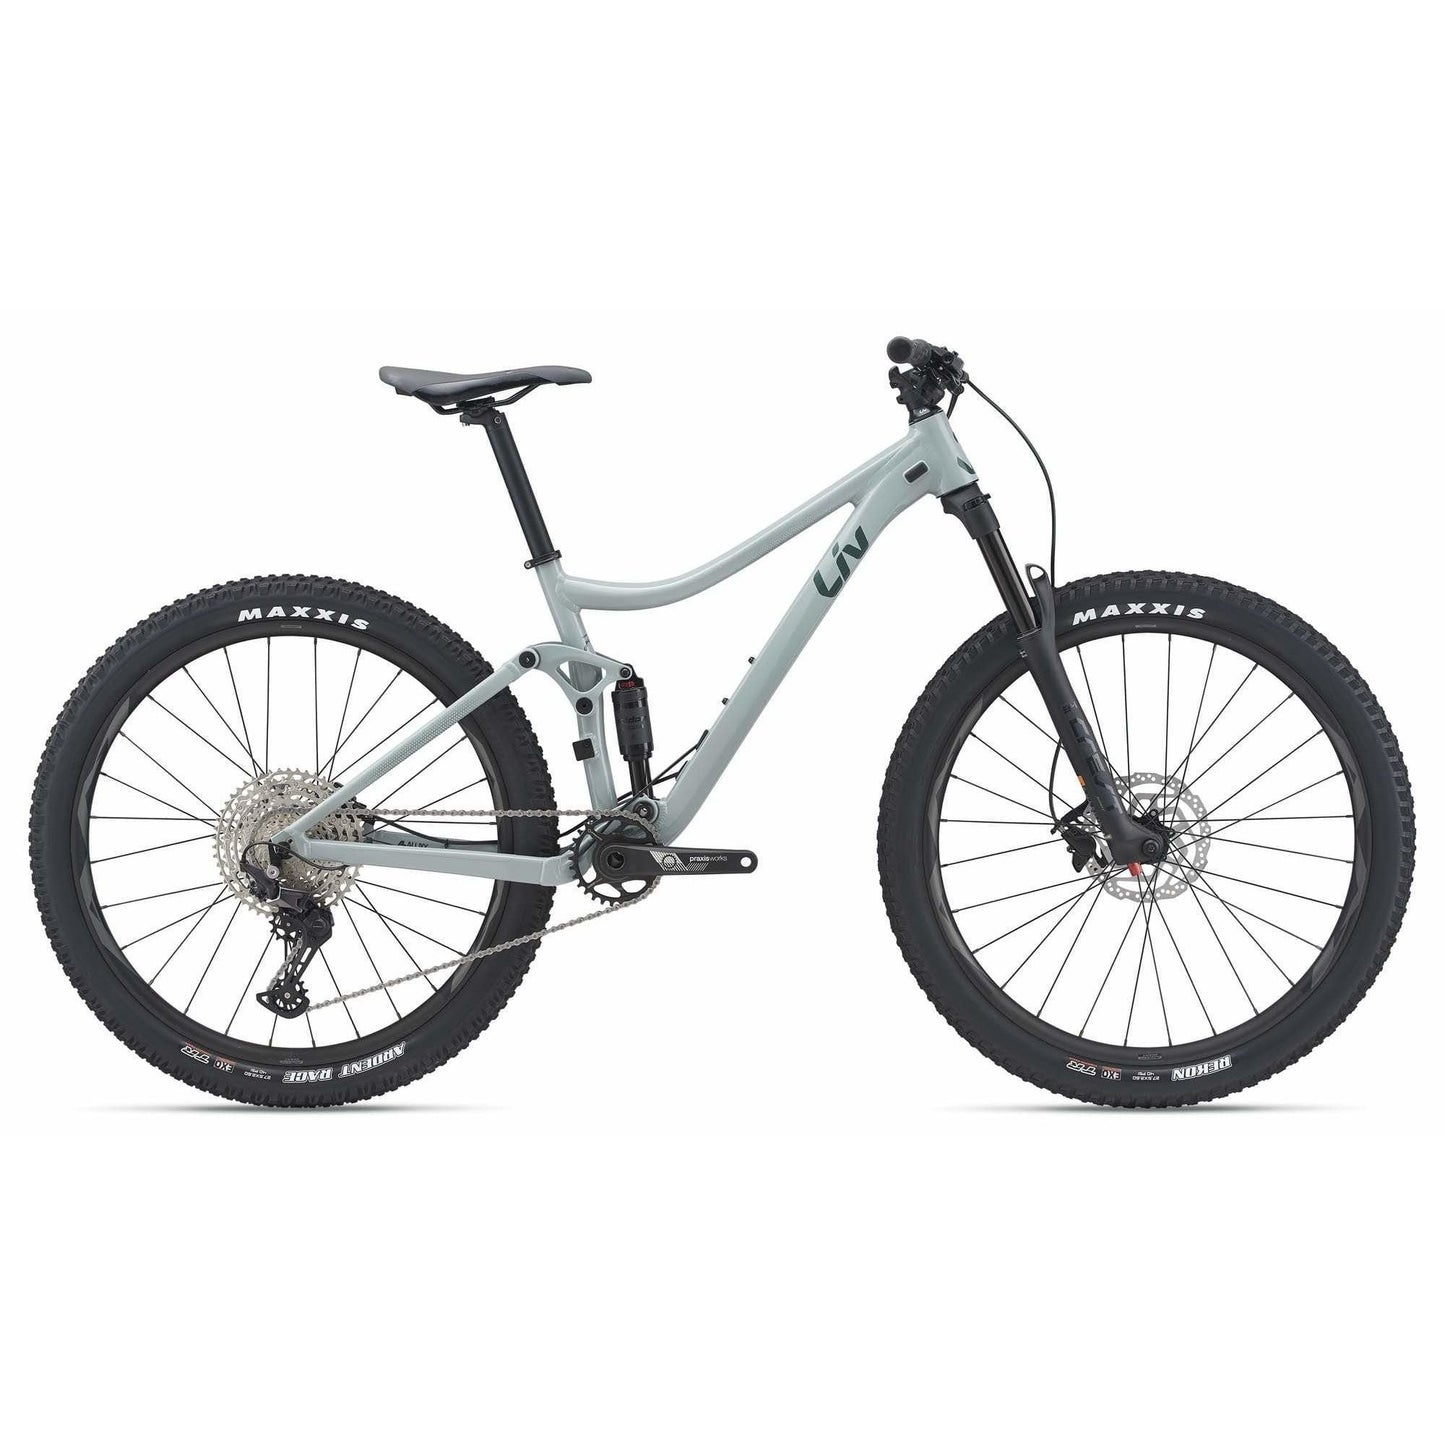 Liv Embolden 2 - 27.5" Mountain Bike (2021)